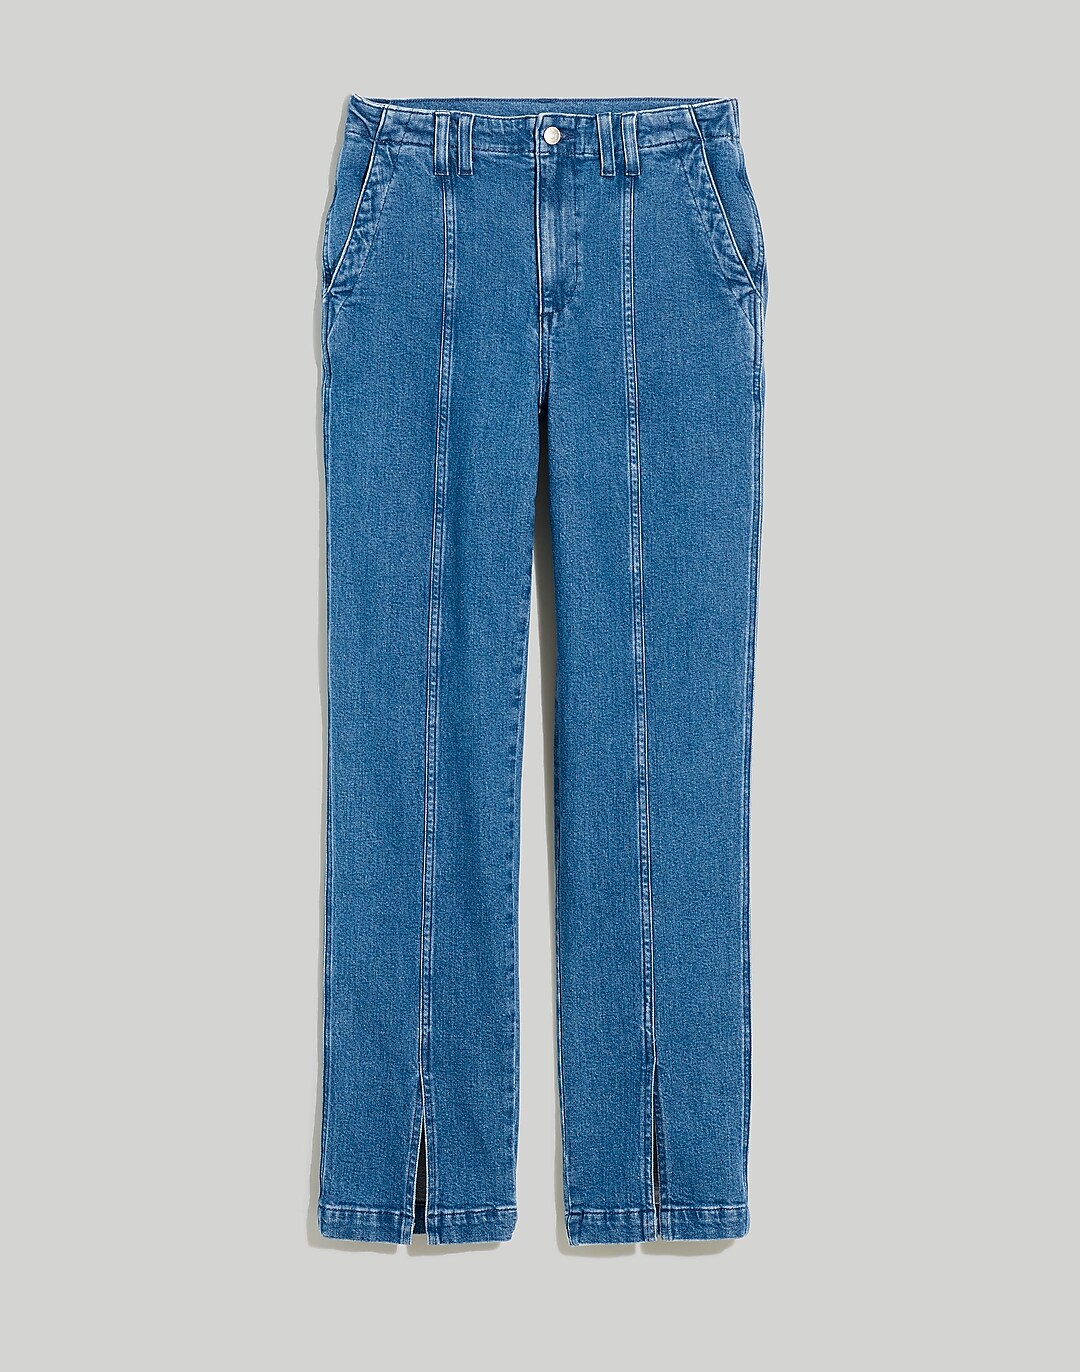 The Perfect Vintage Jean in Medium Indigo Wash: Seamed Edition